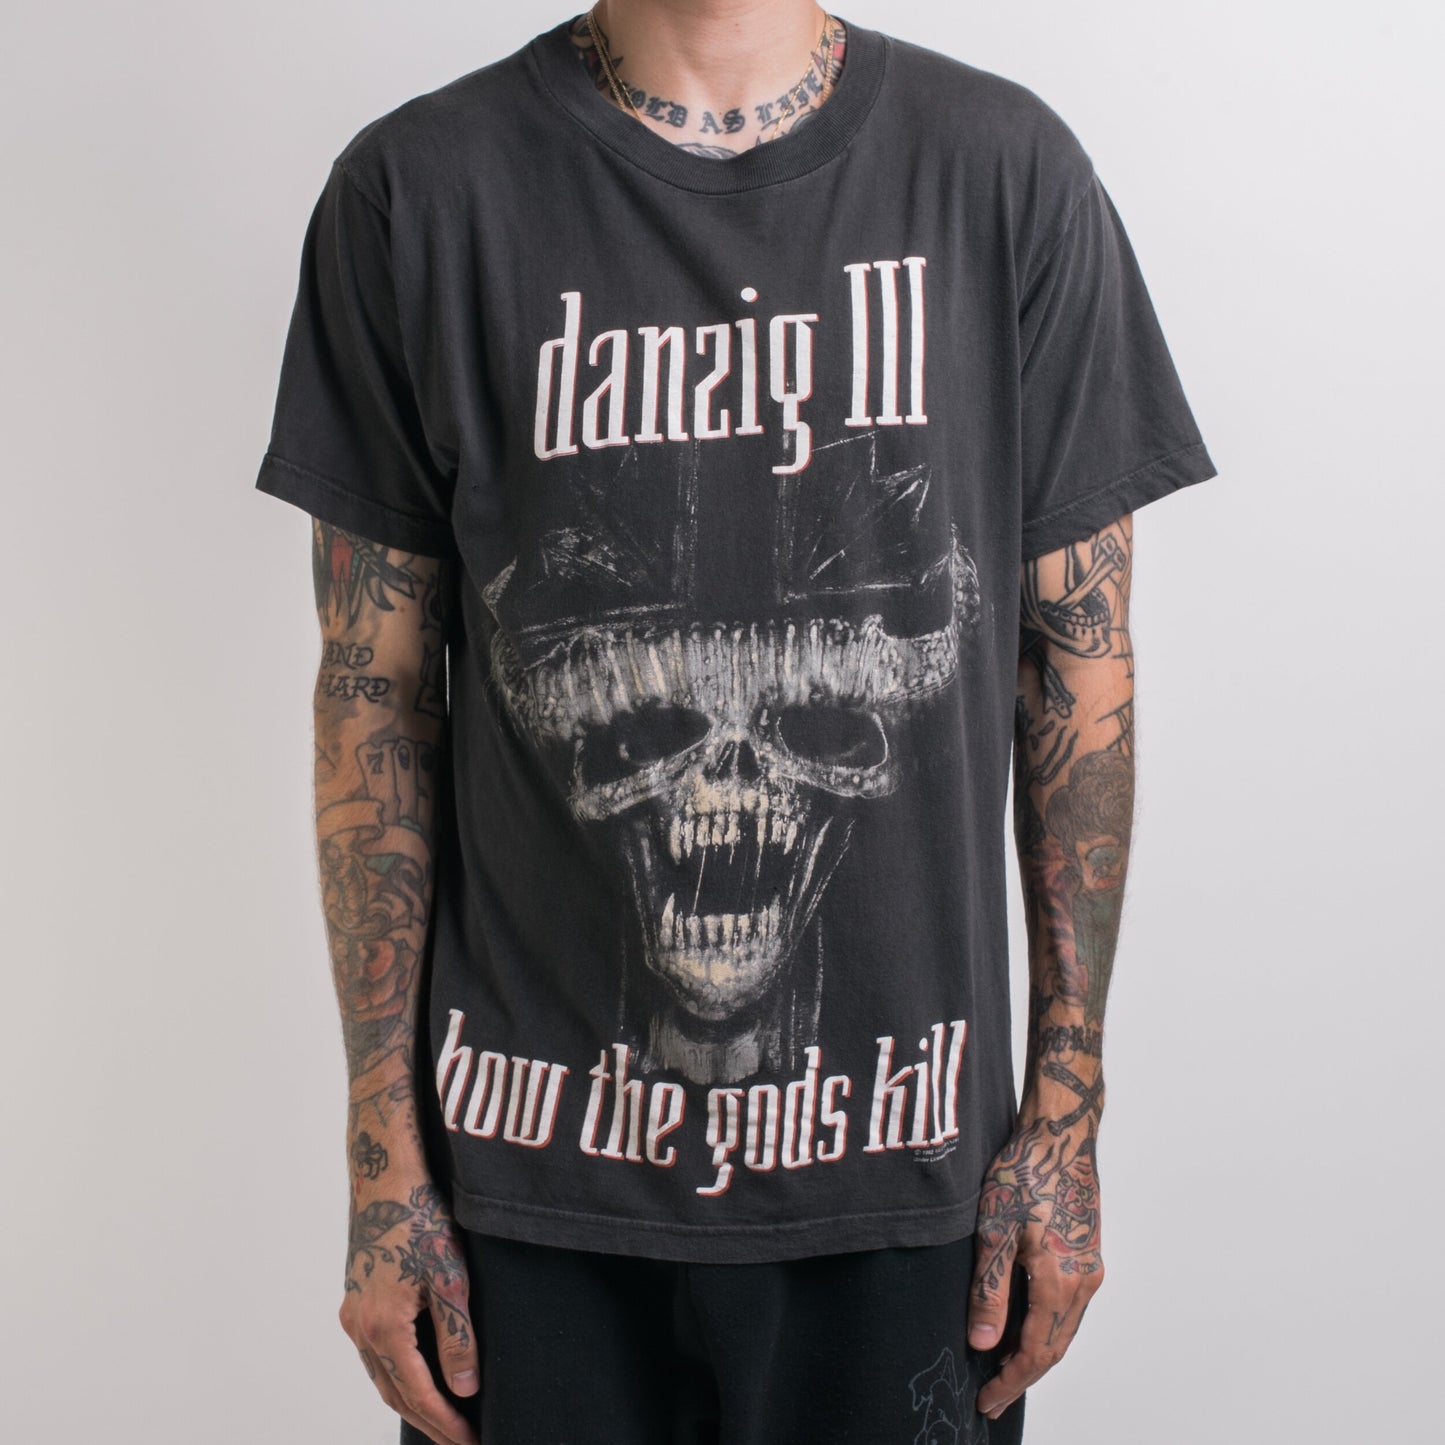 Vintage 1992 Danzig Dirty Black Summer Euro Tour T-Shirt